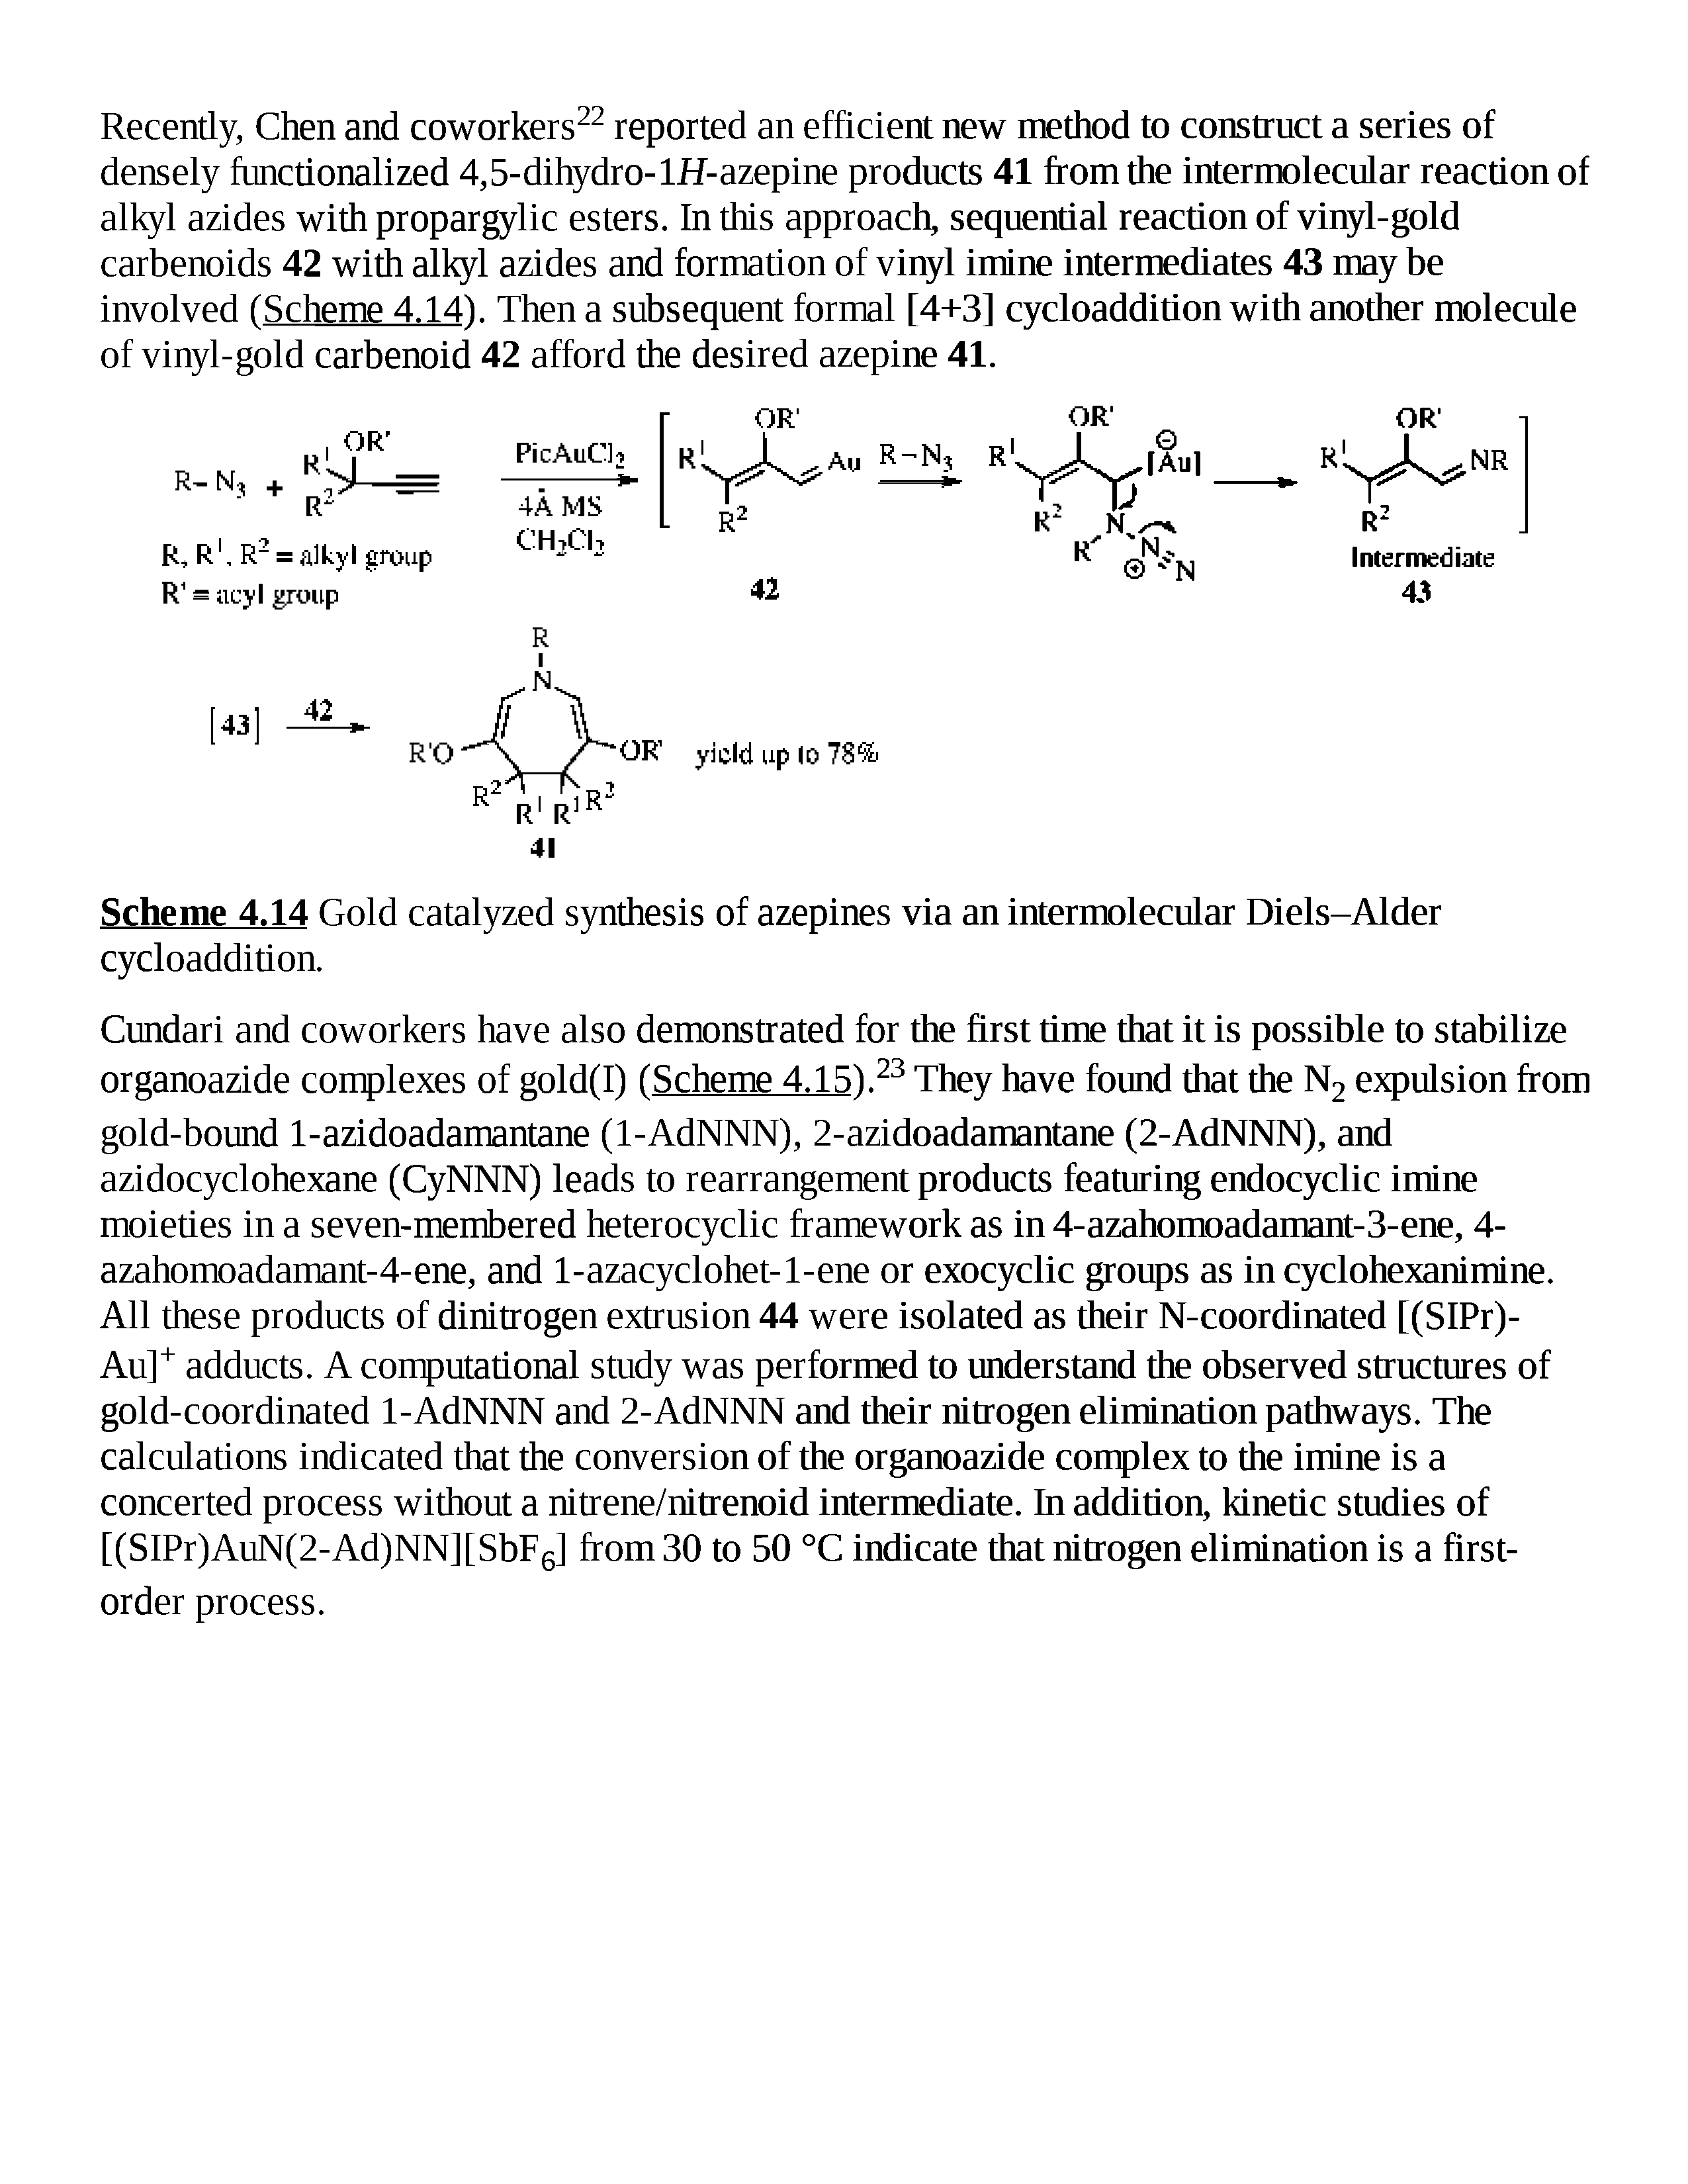 Scheme 4.14 Gold catalyzed synthesis of azepines via an intermolecular Diels-Alder cycloaddition.